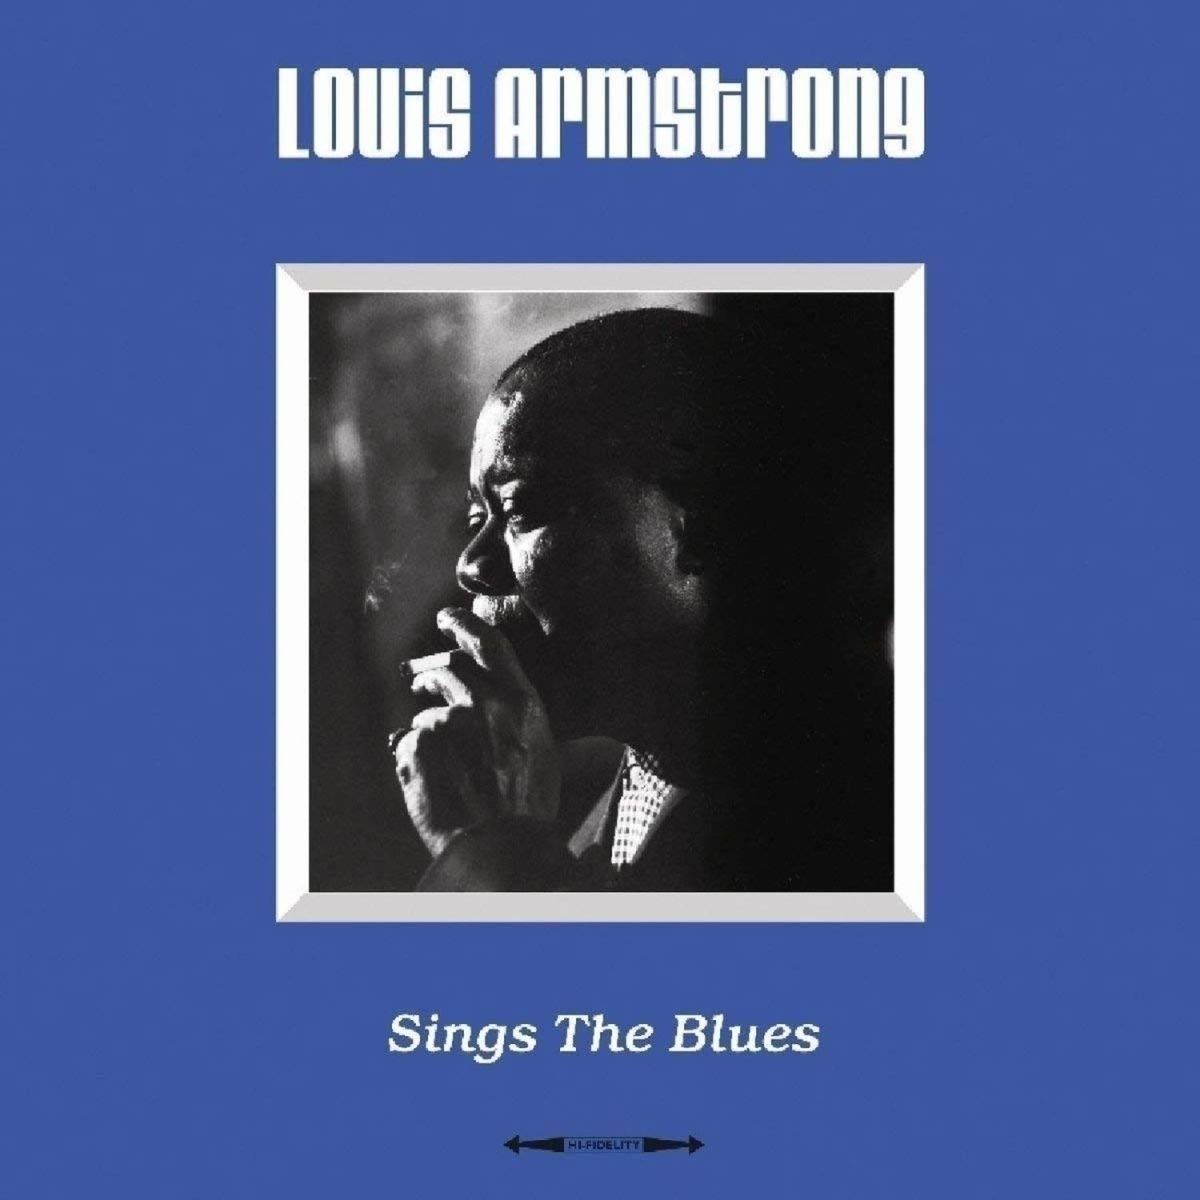 Singing the blues. Луи Армстронг. Louis Armstrong singing. Луи Армстронг пластинка. Джаз, блюз и соул.